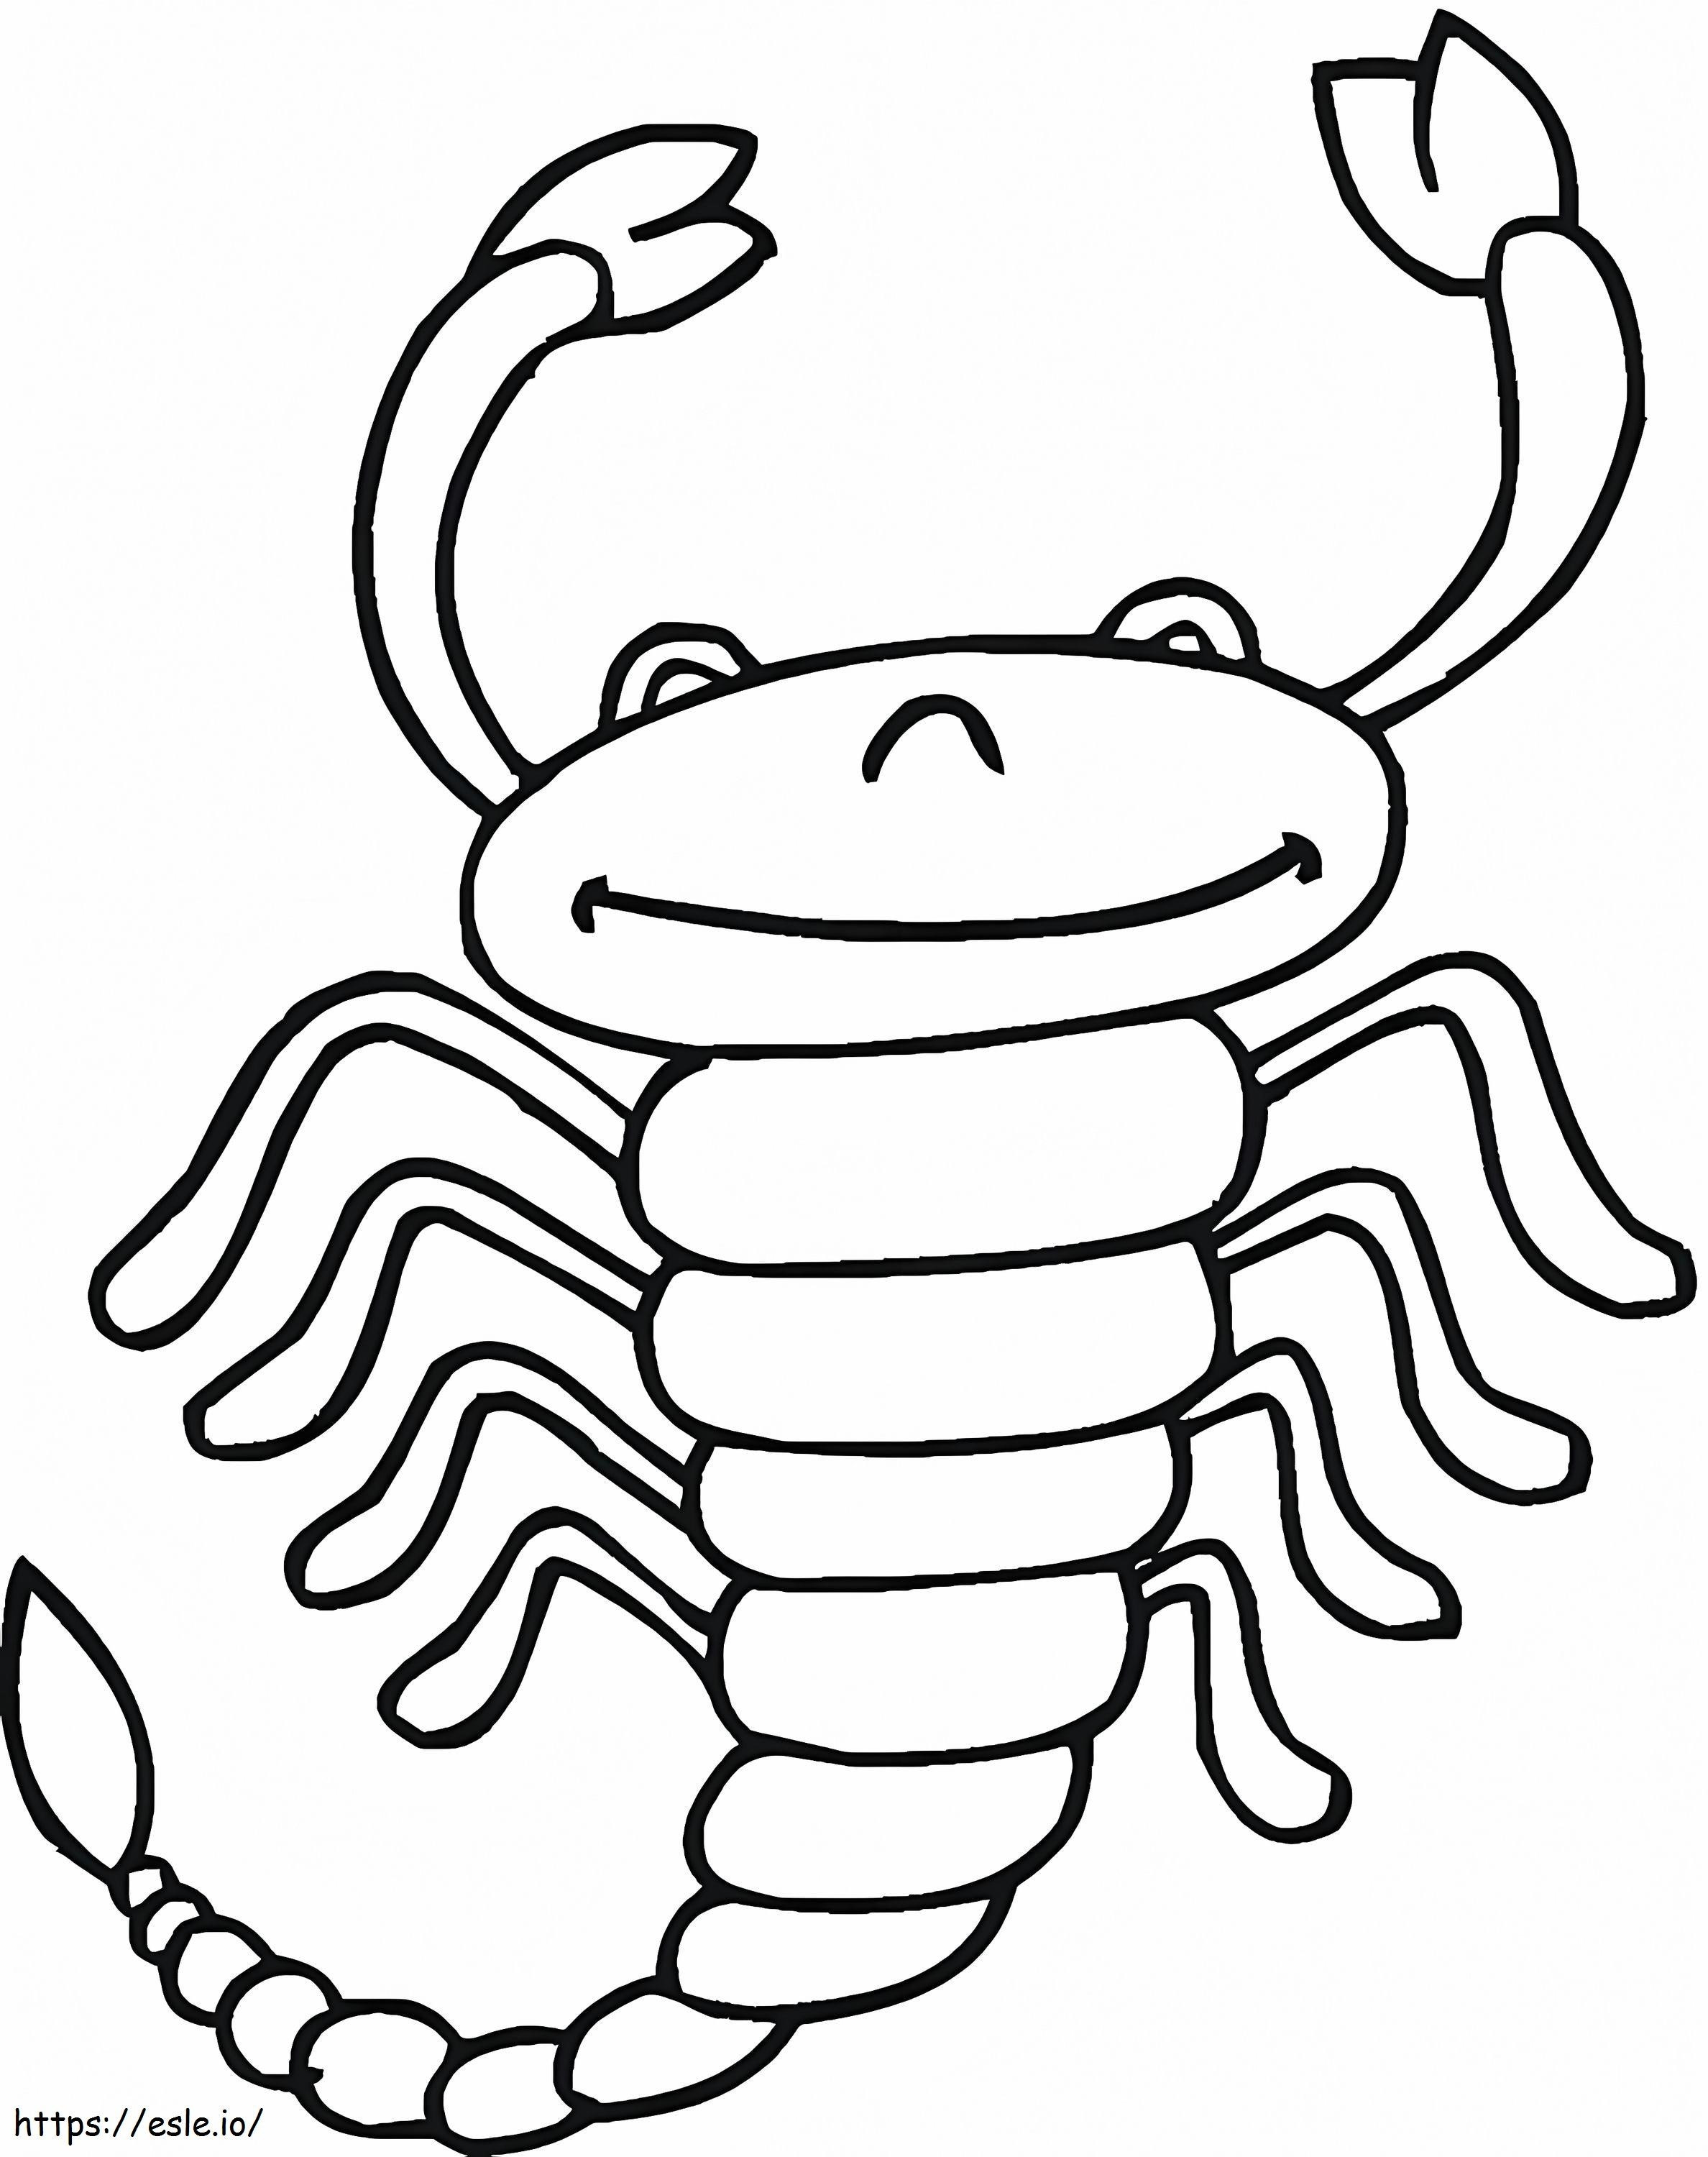 Scorpion amuzant de colorat